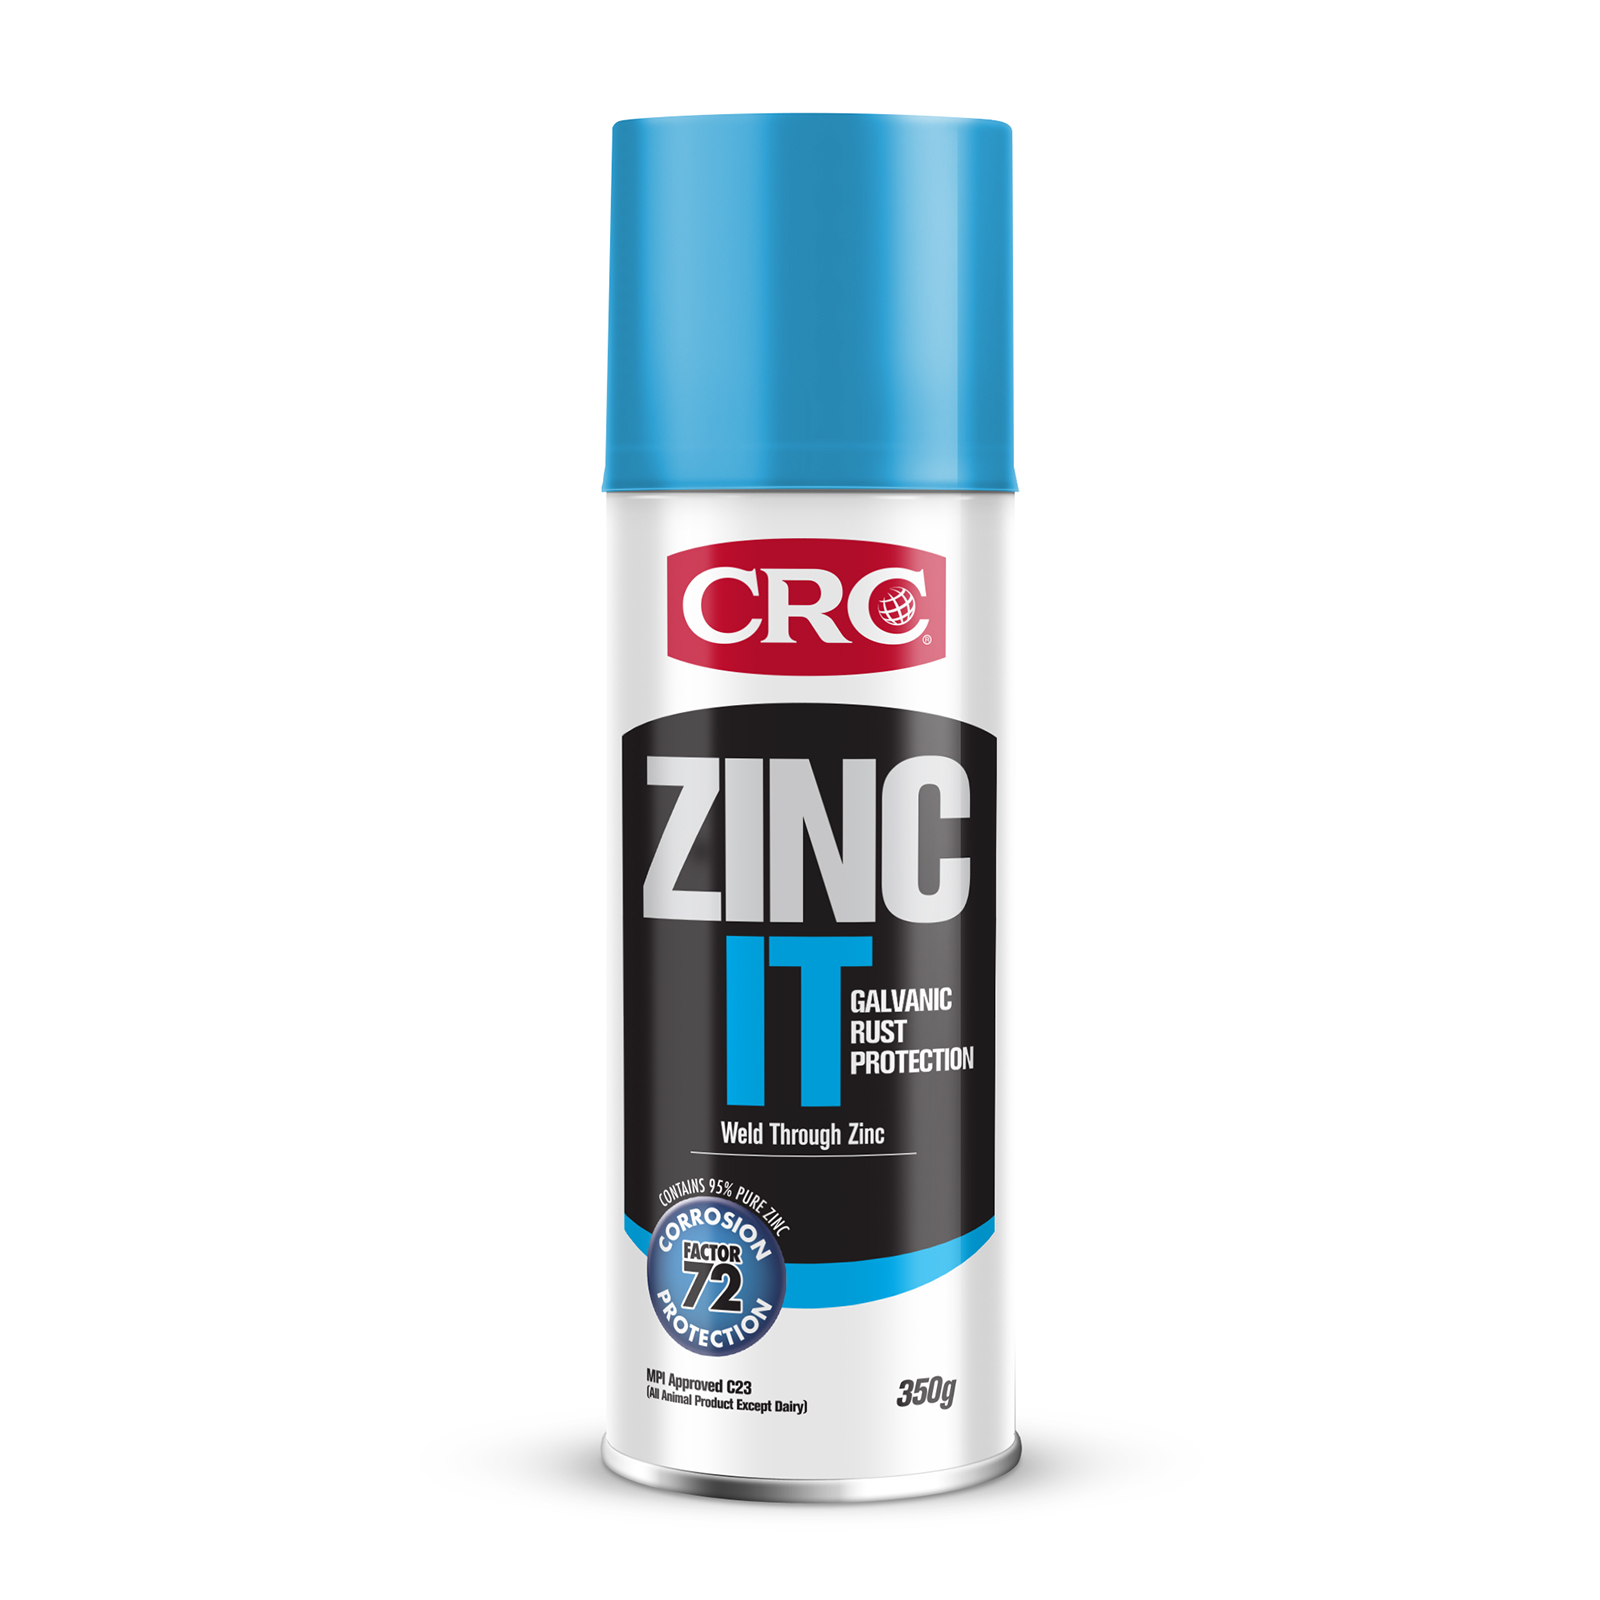 does zinc rust